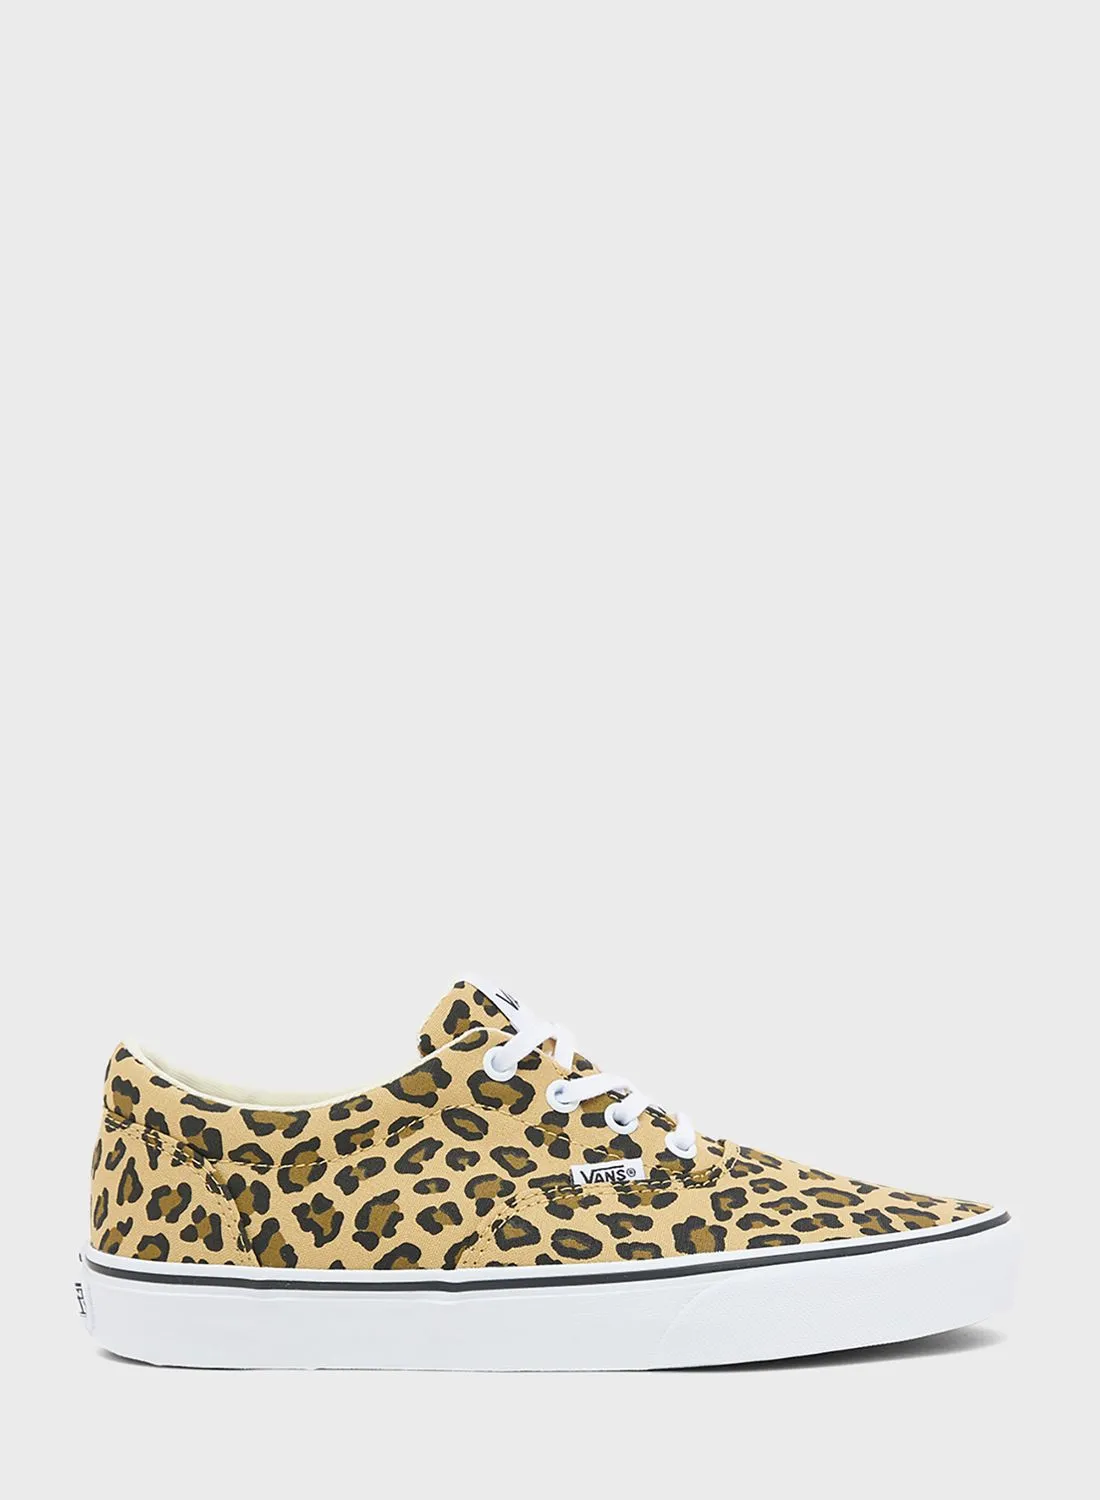 VANS Leopard Print Doheny Sneakers